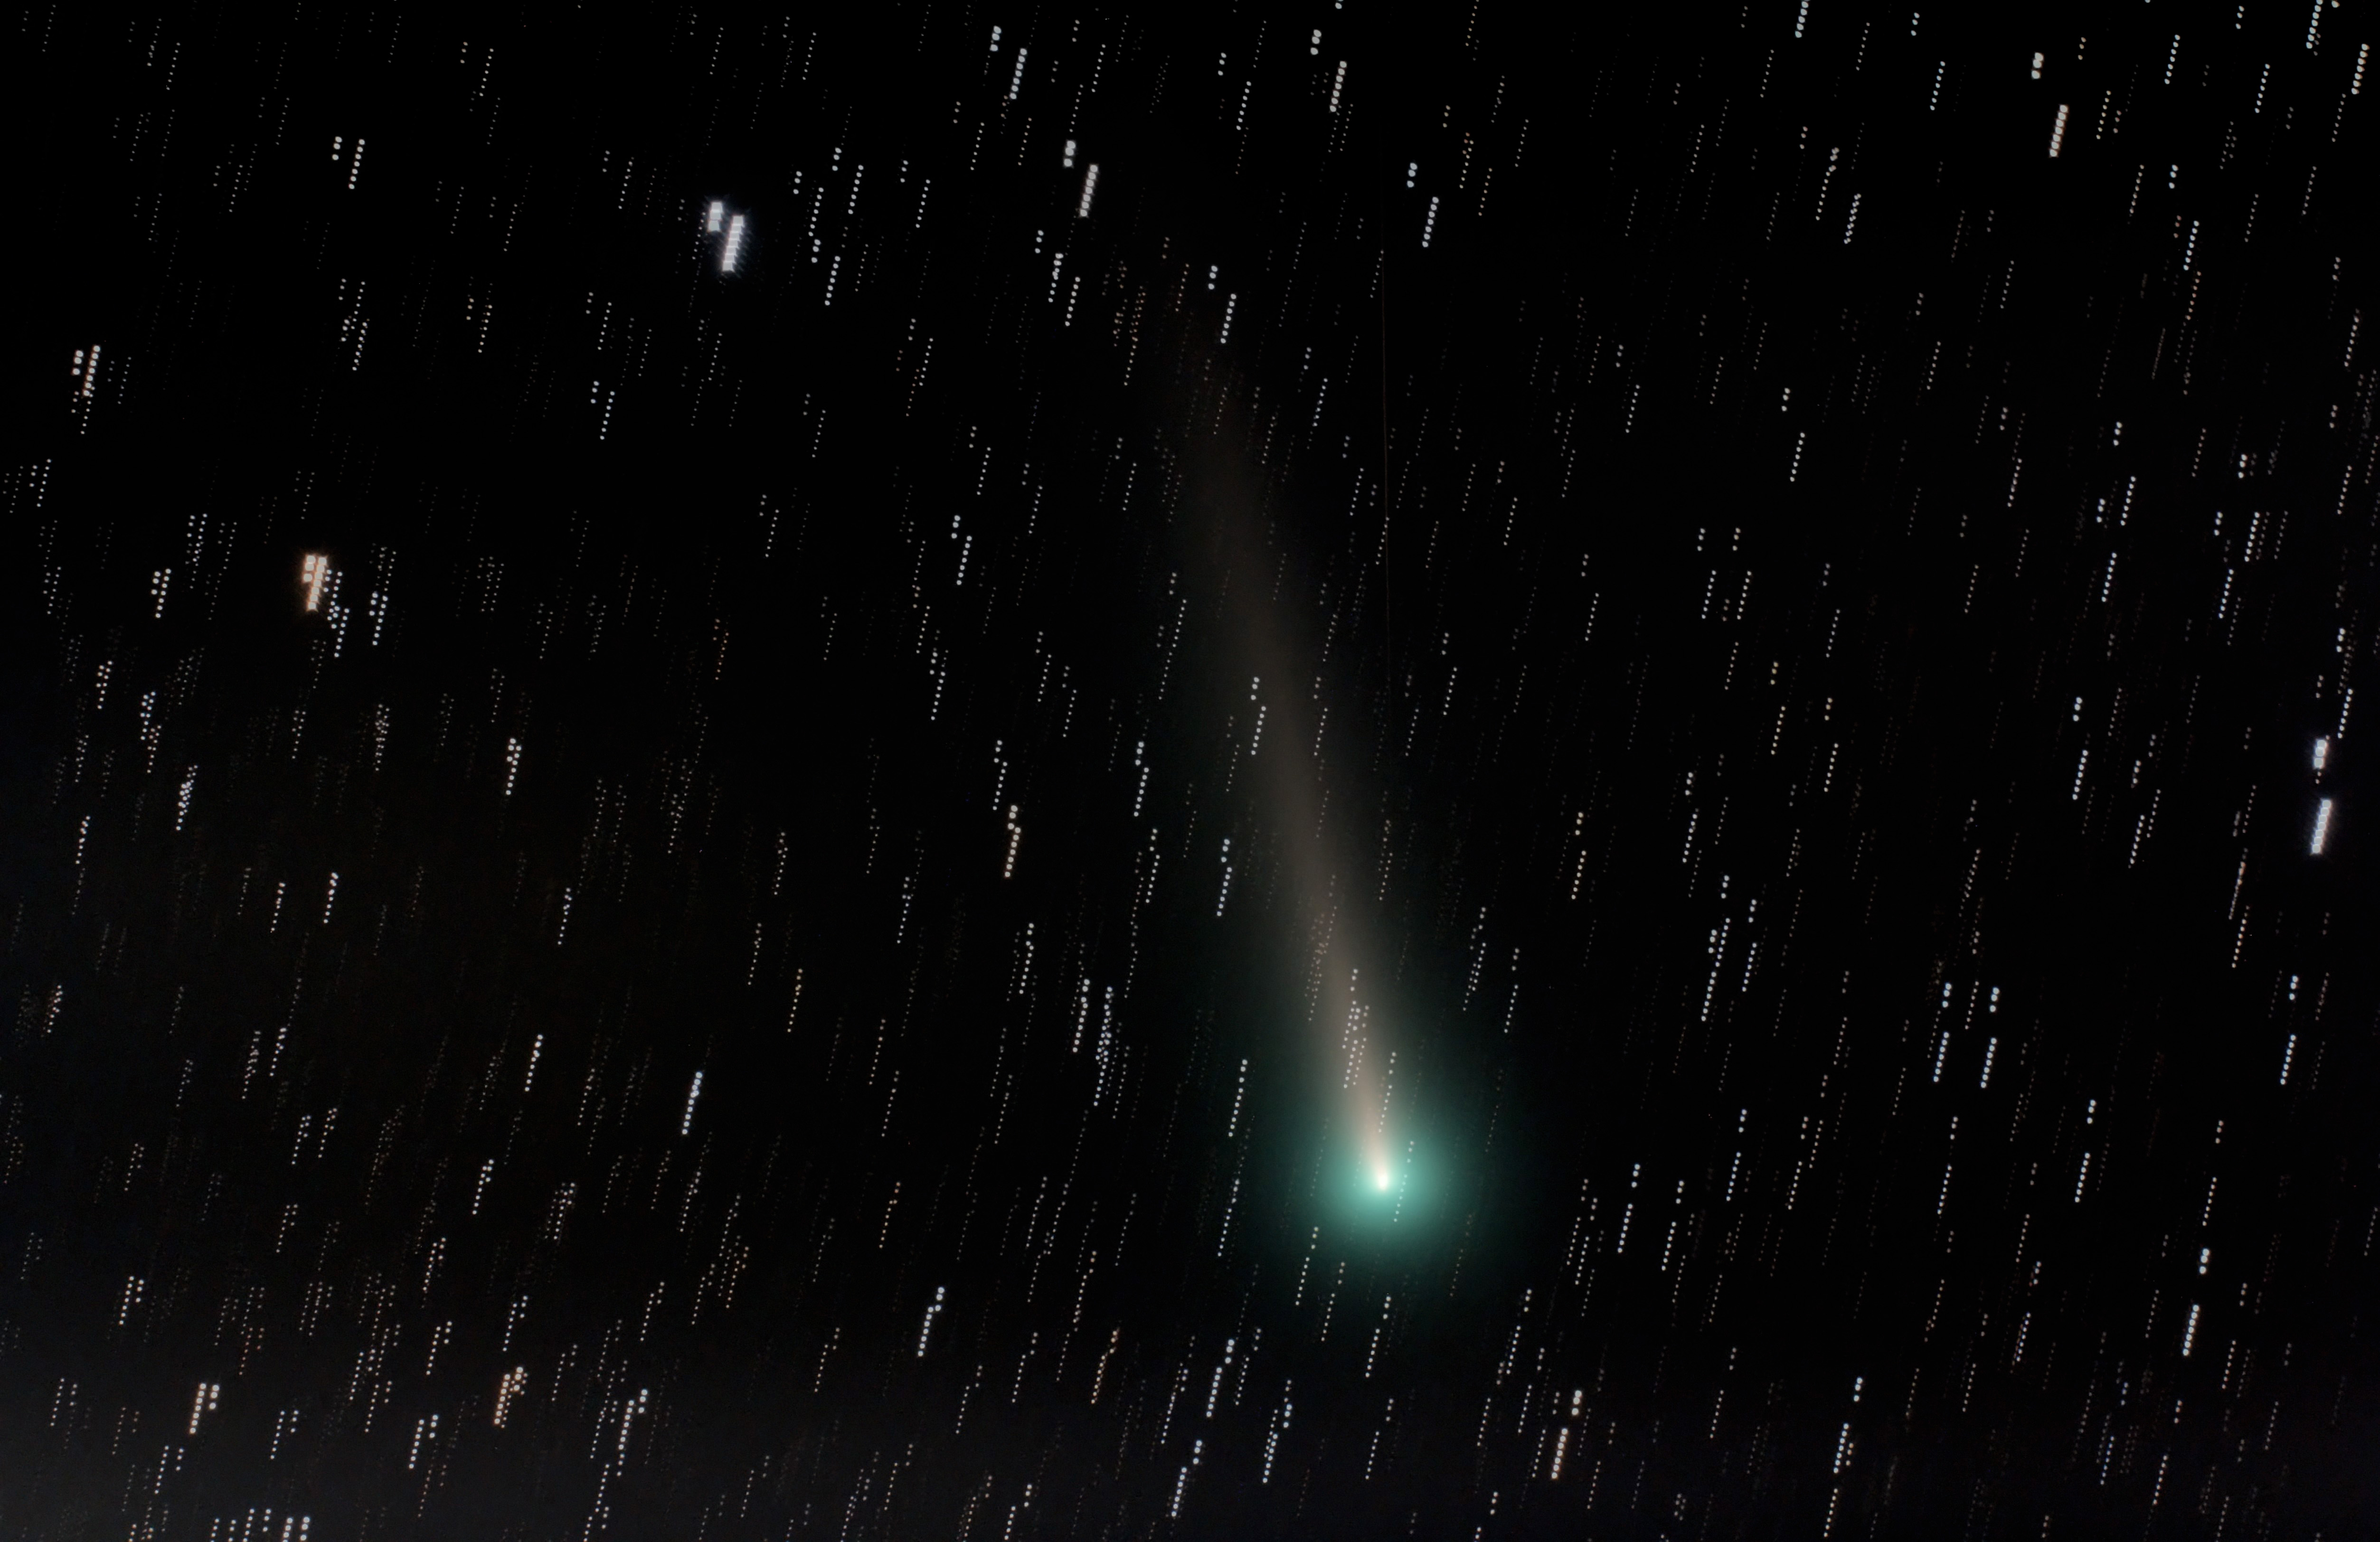 Comet_C2021A1 Leonard_211204_E160_60D_IP10-102c_filtered.jpg